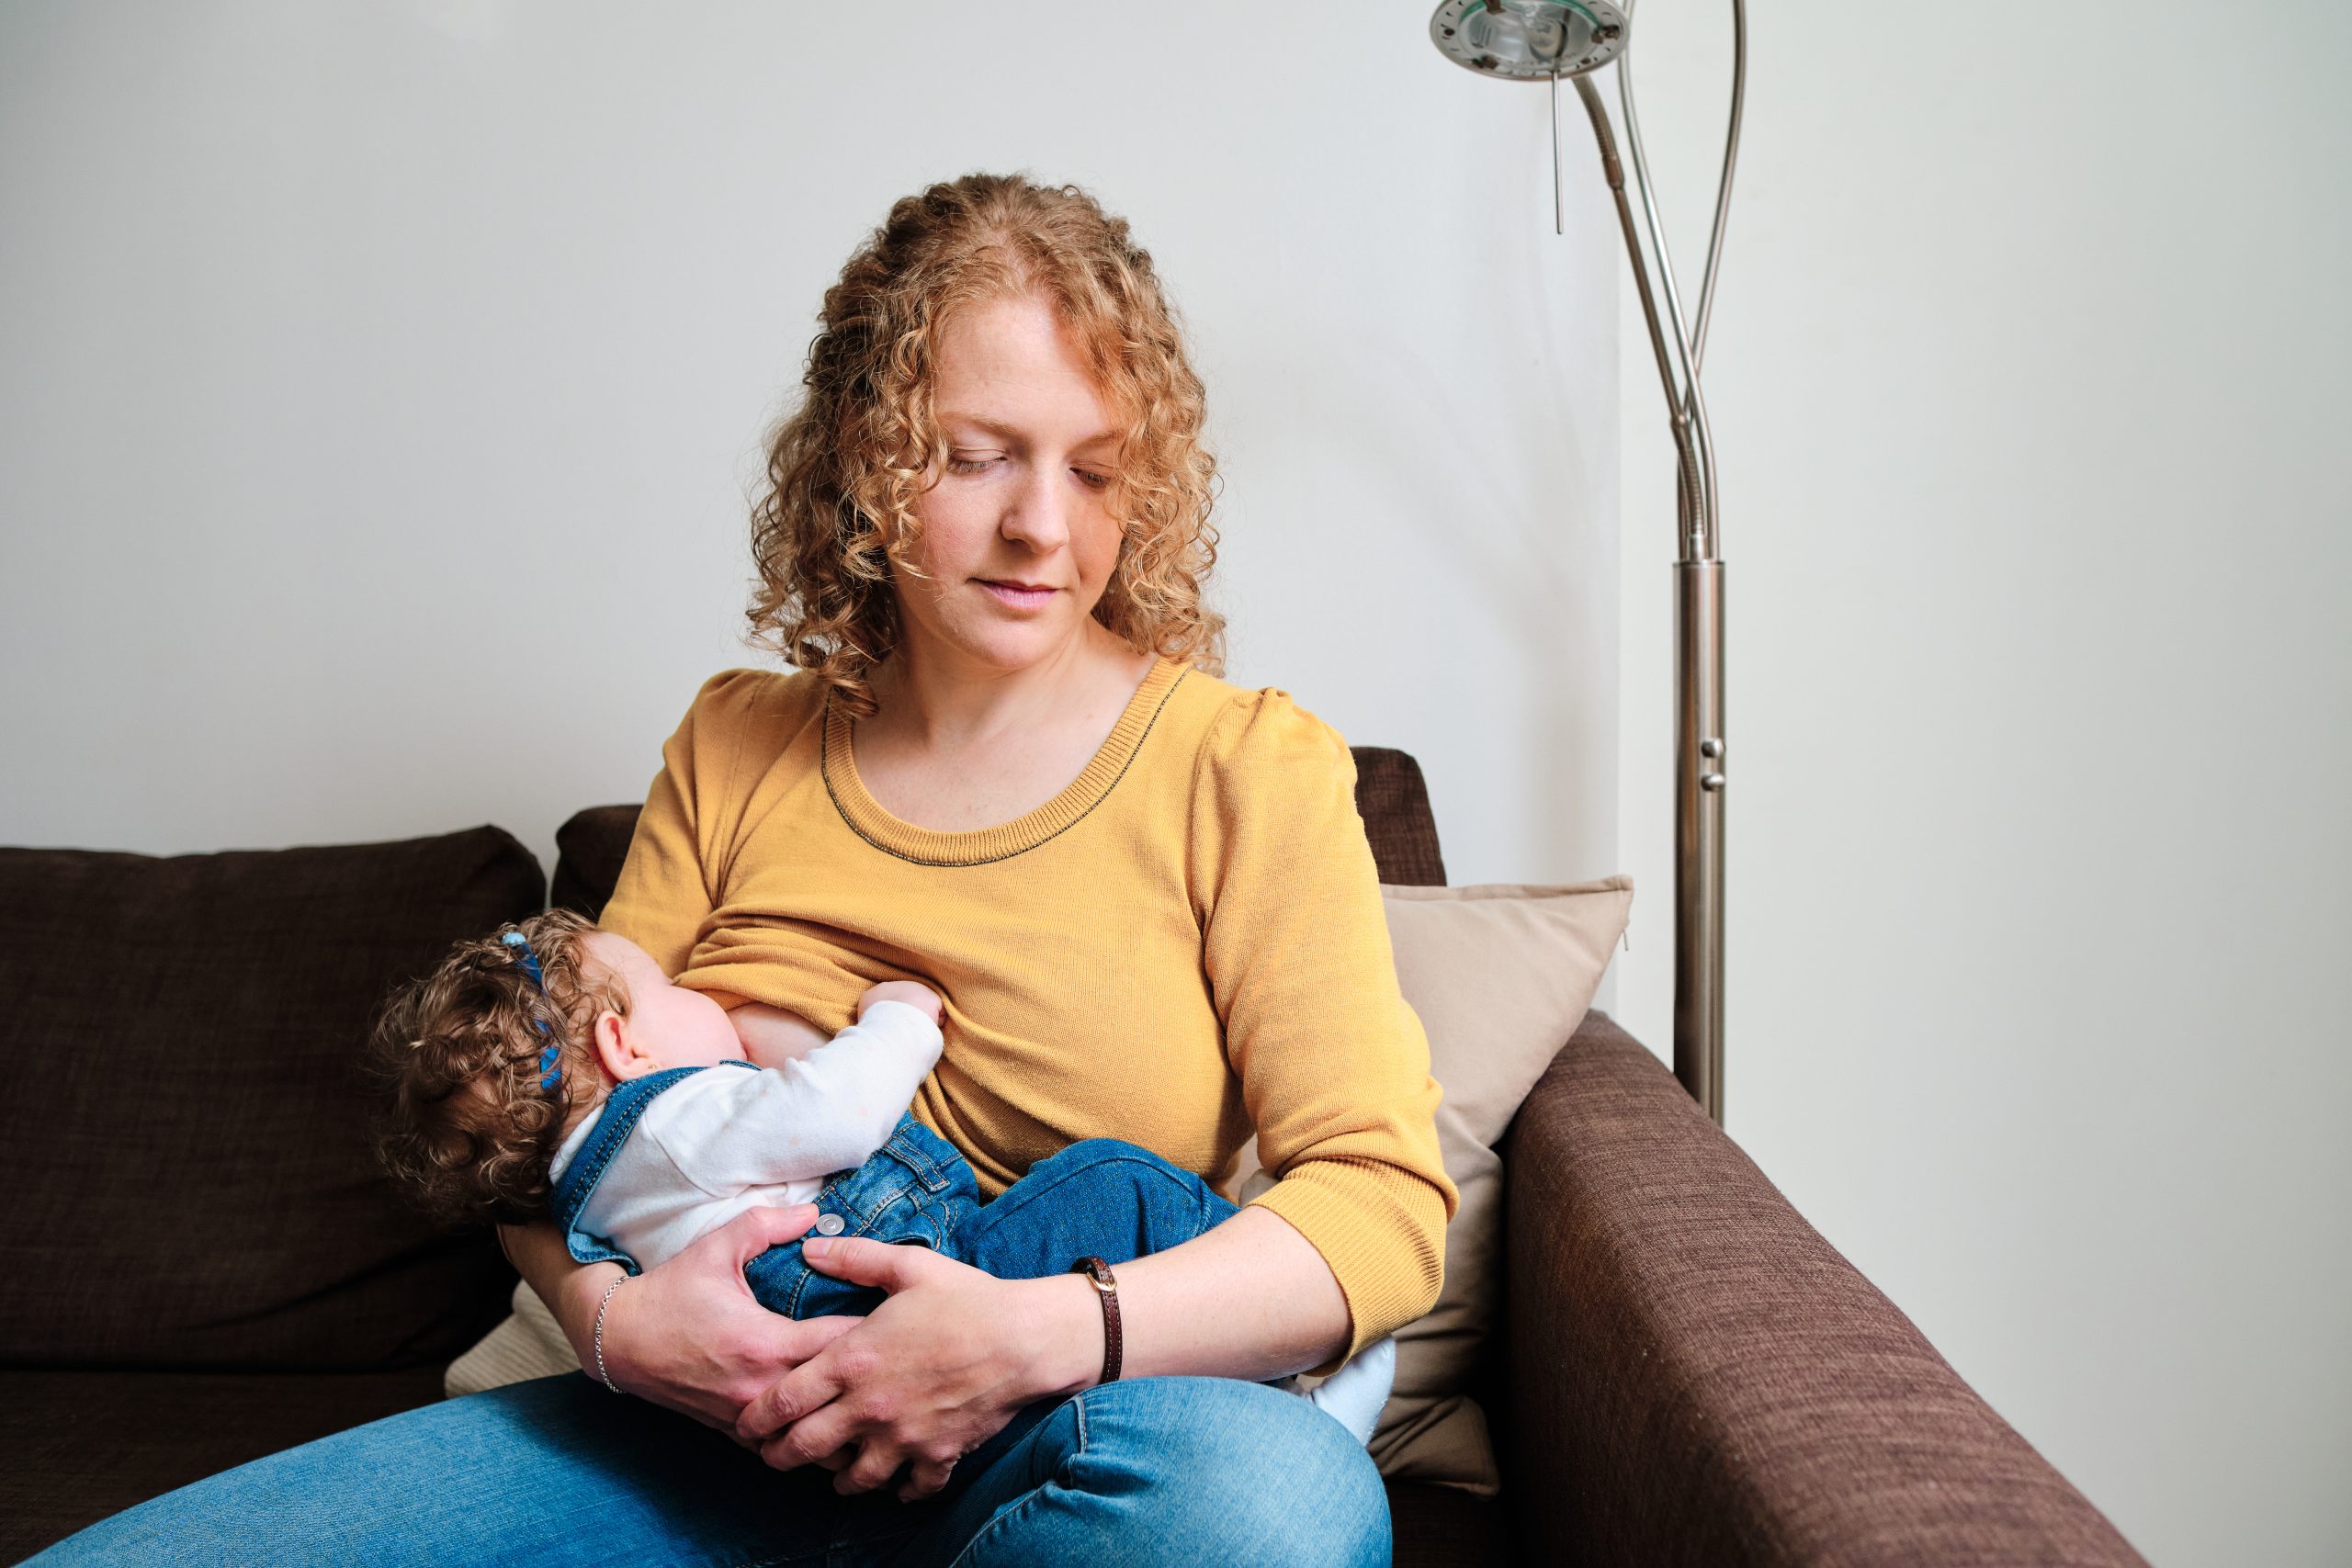 breastfeeding aversion study - Australia